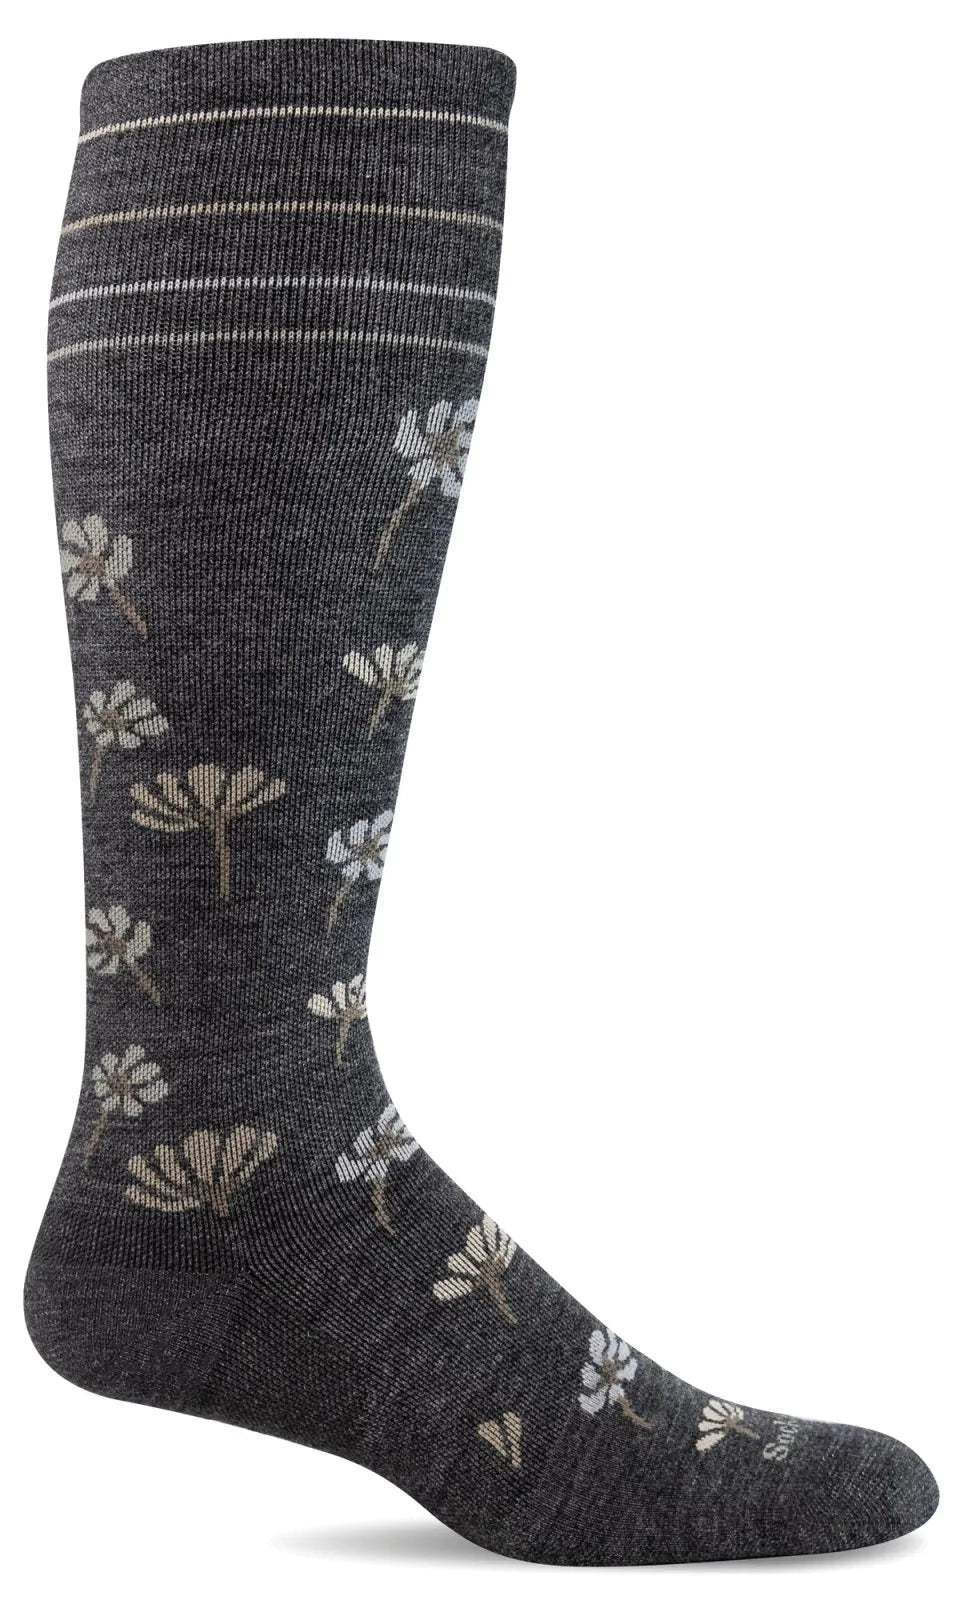 Field Flower Charcoal Compression Sock (Women's size scale)